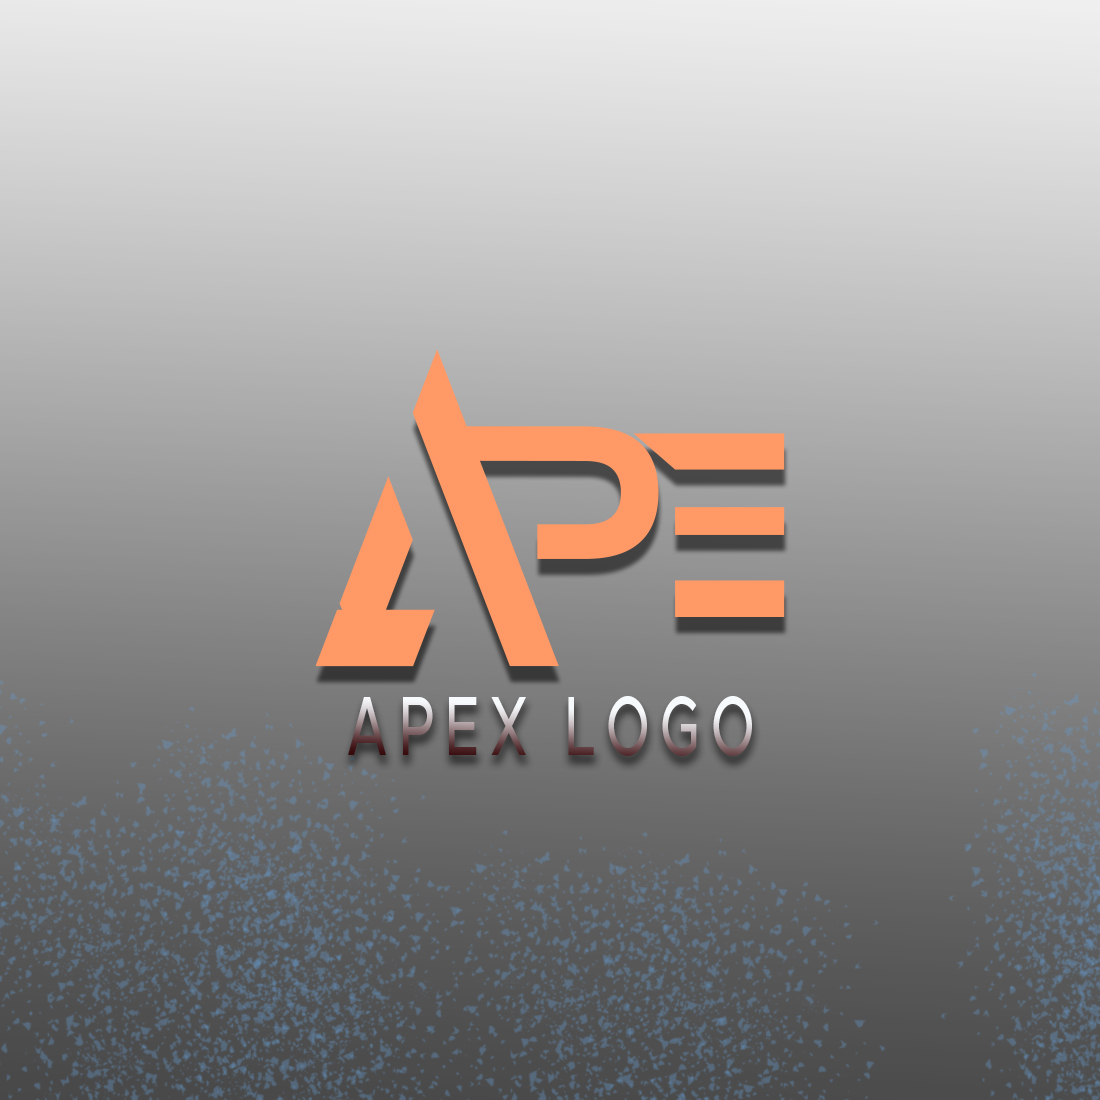 Logo for apexx logo.